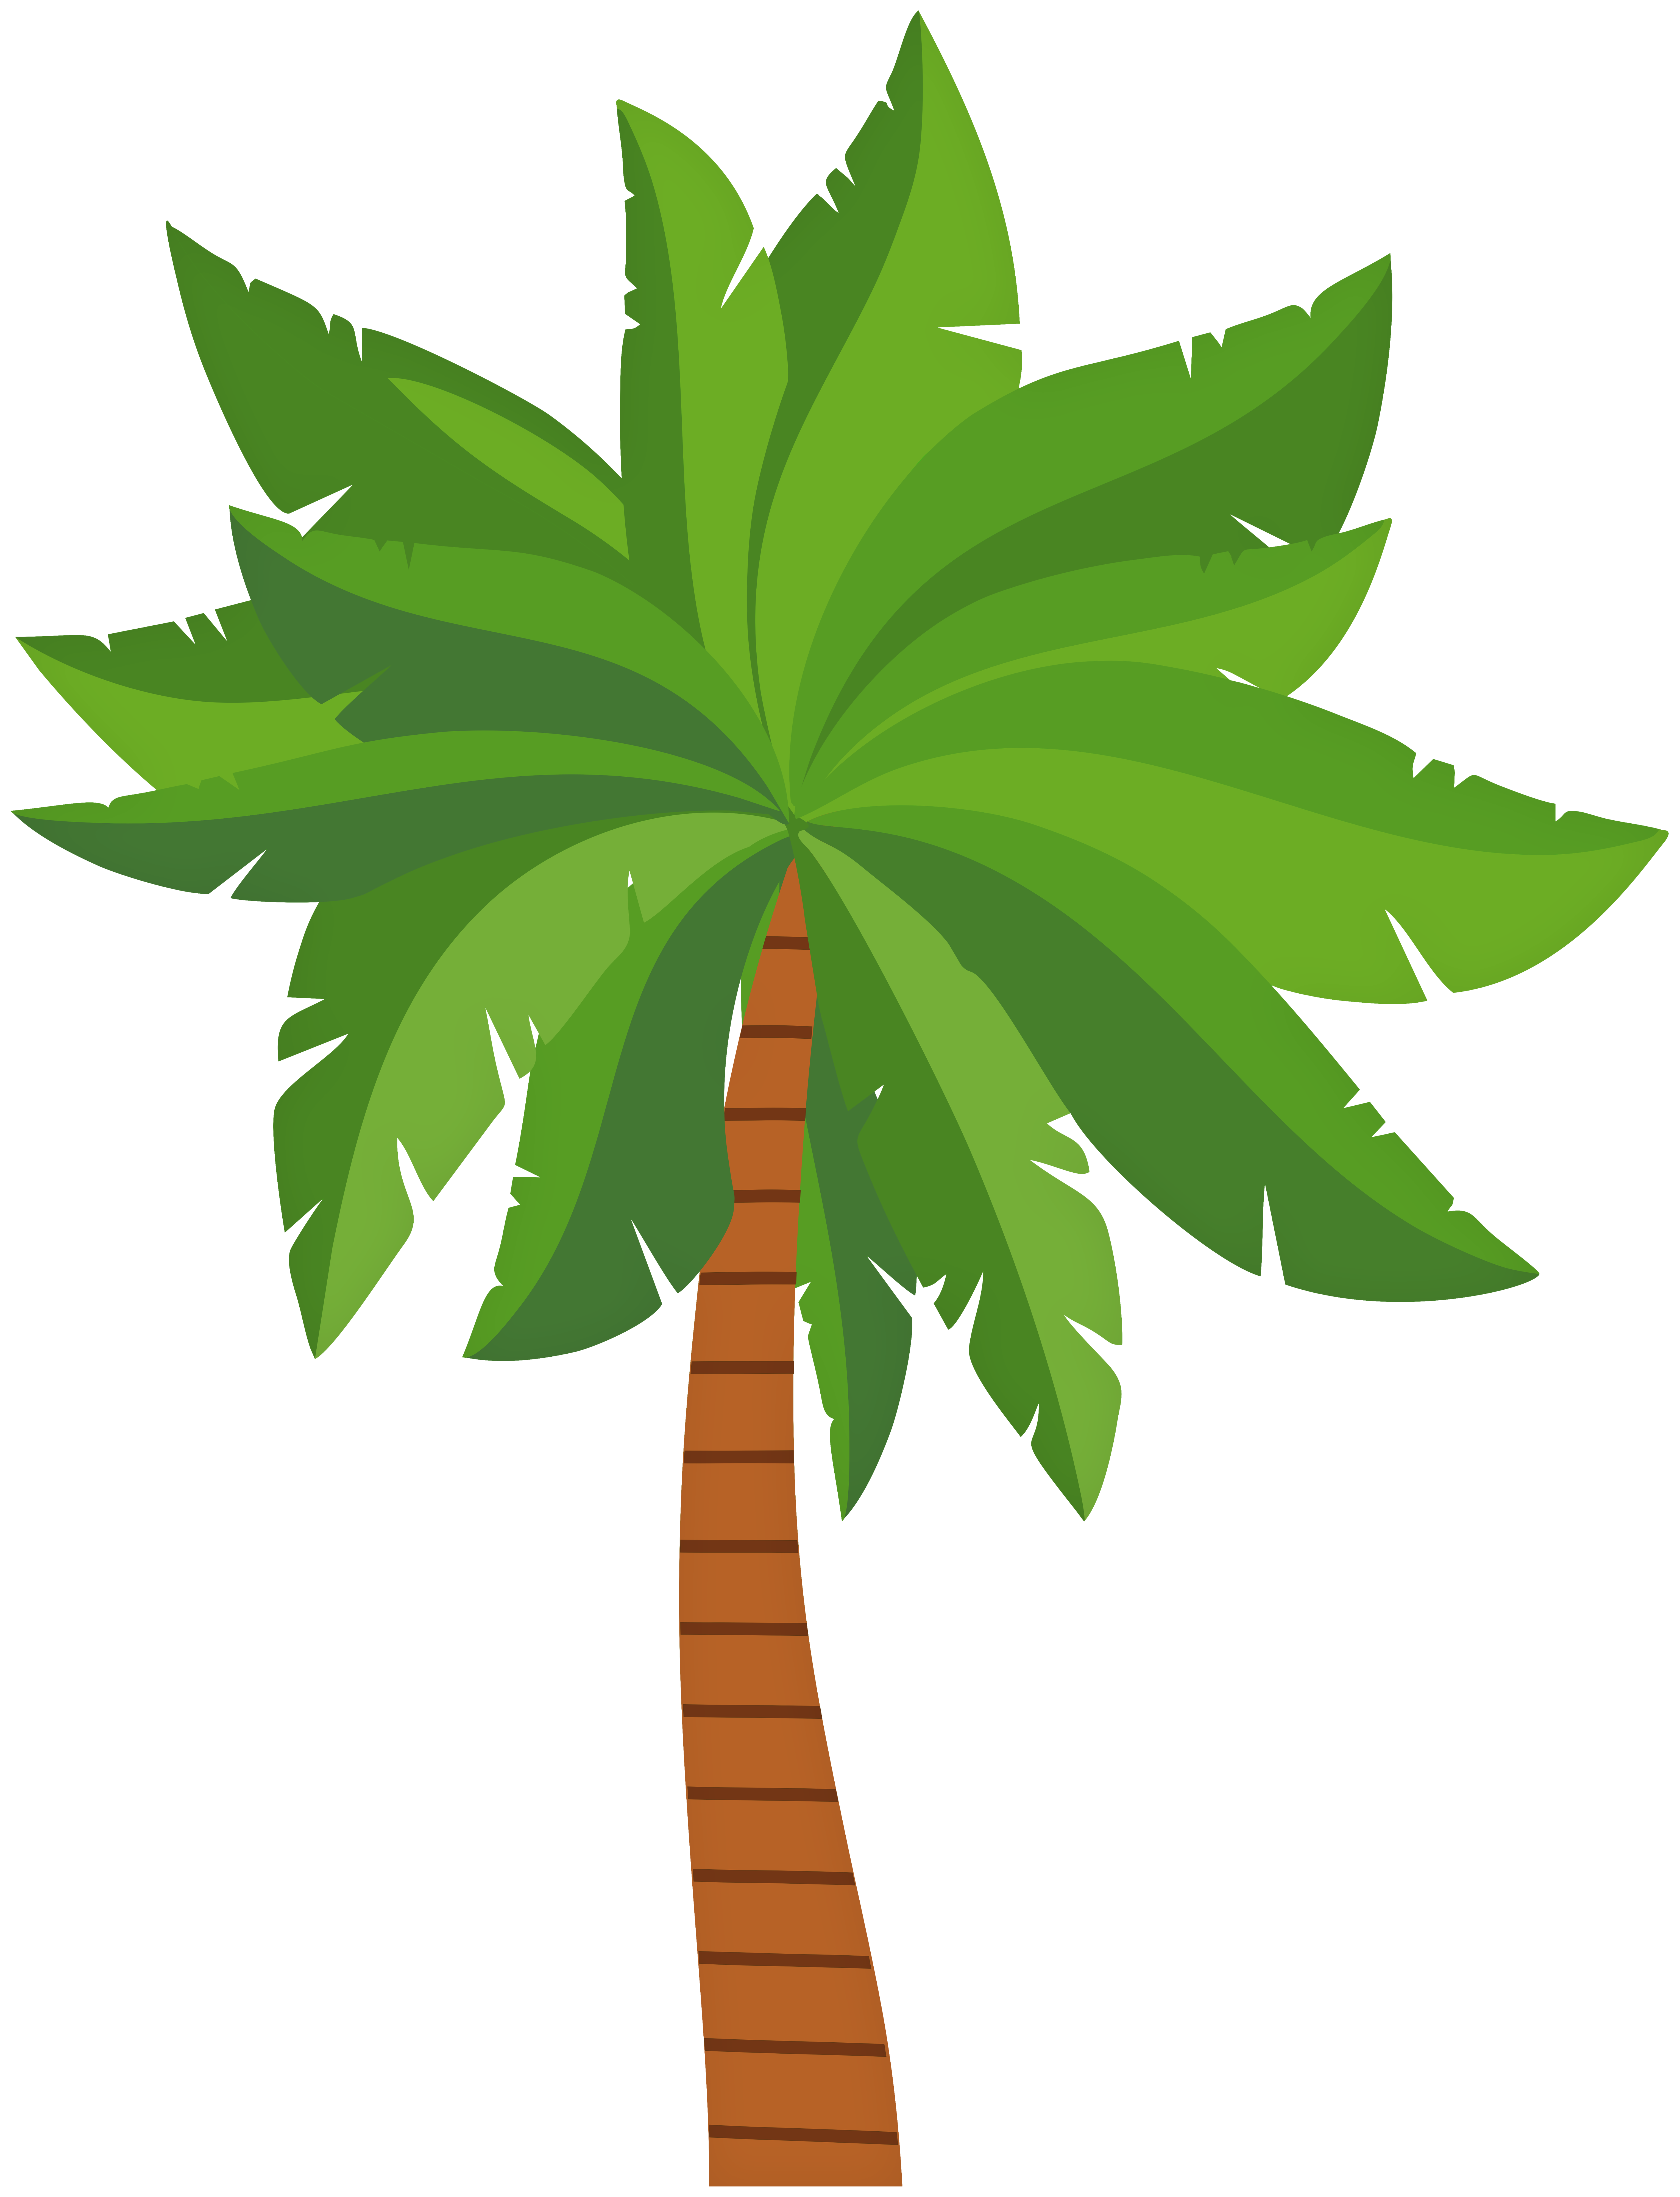 Palm Tree Clip Art Png